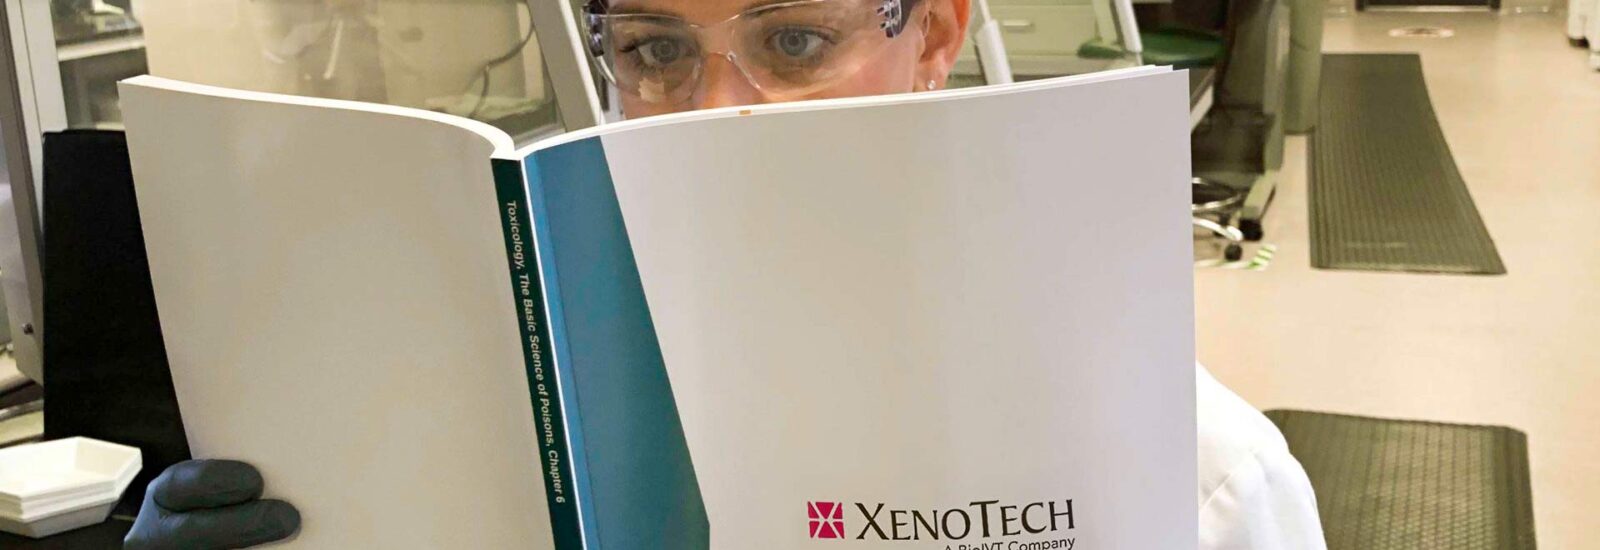 Lab researcher reading Xenotech biotransformation of xenorobotics book